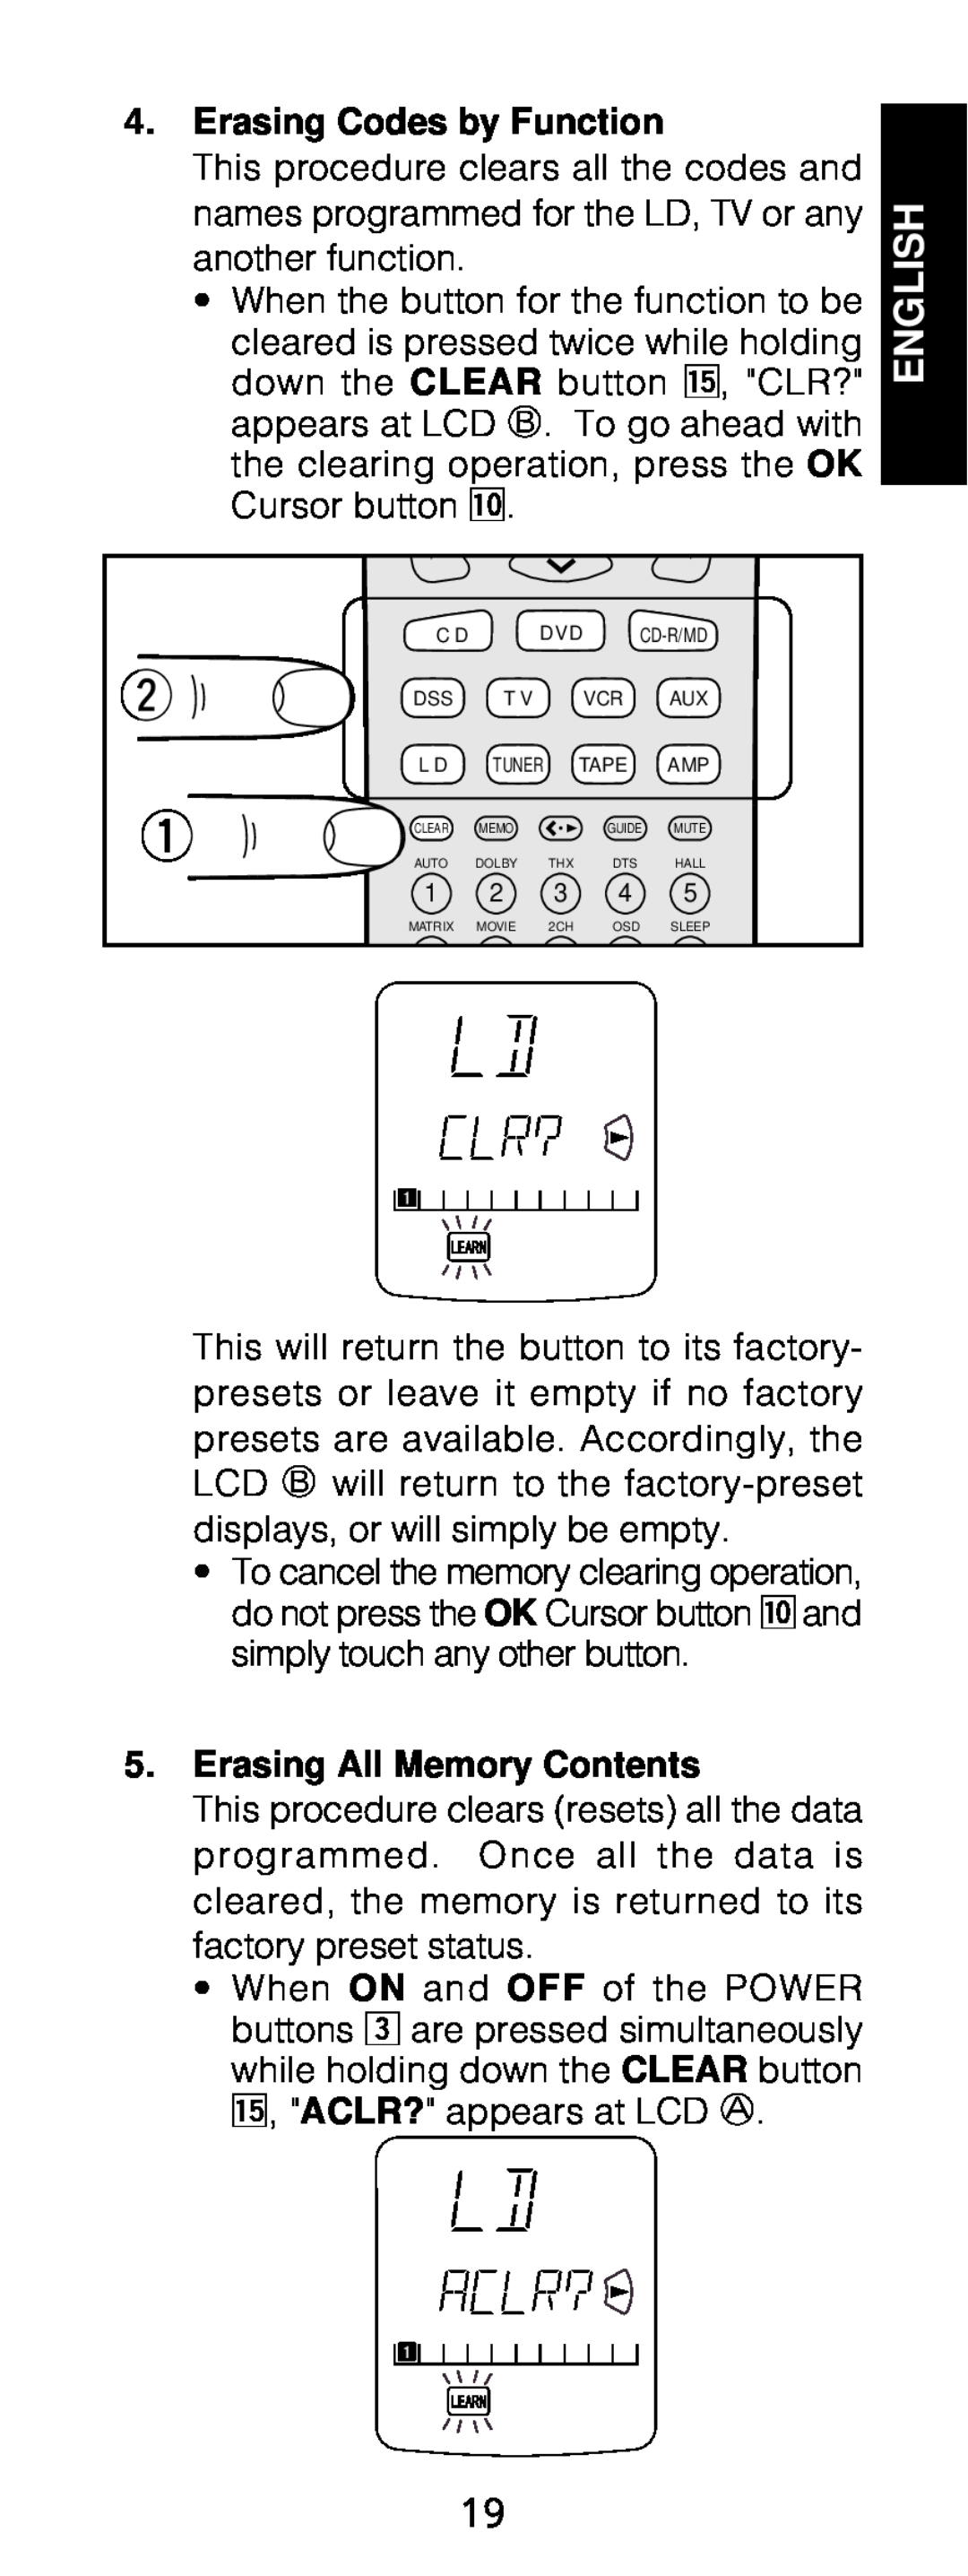 Marantz RC1200 manual Erasing Codes by Function, Erasing All Memory Contents, English 